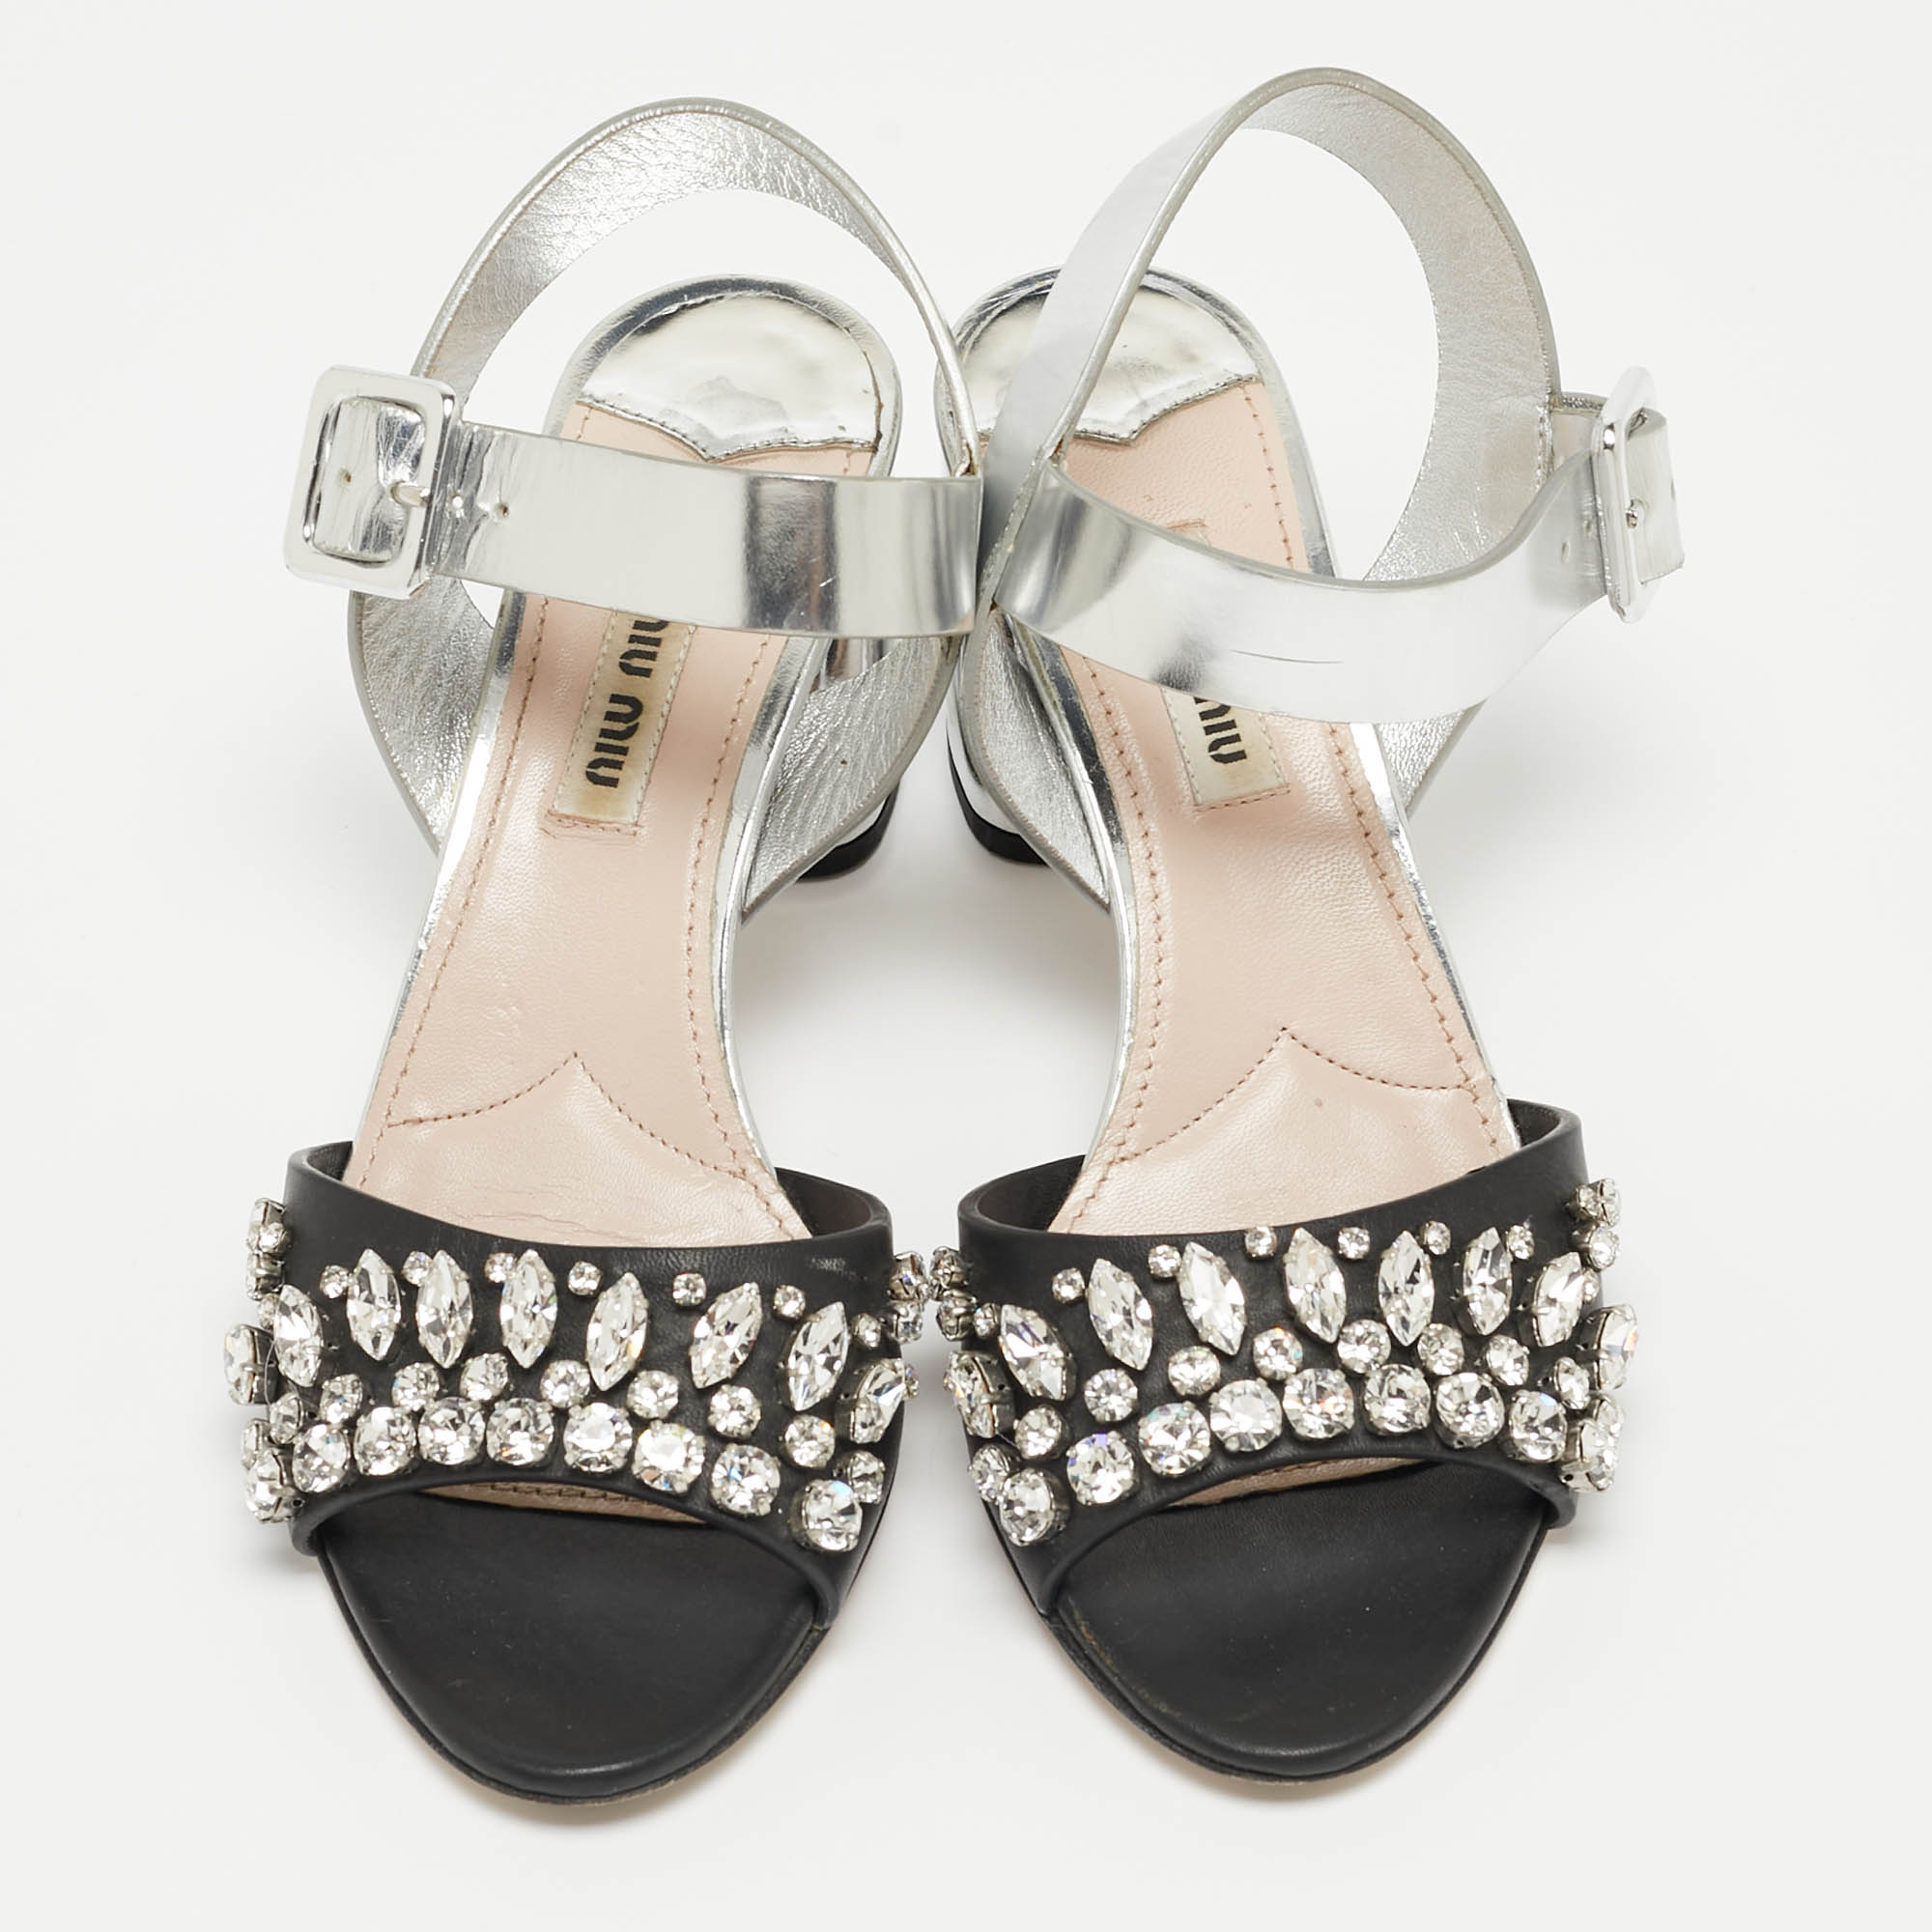 Miu Miu Silver/Black Leather Crystal Embellished Ankle Strap Sandals Size 35.5